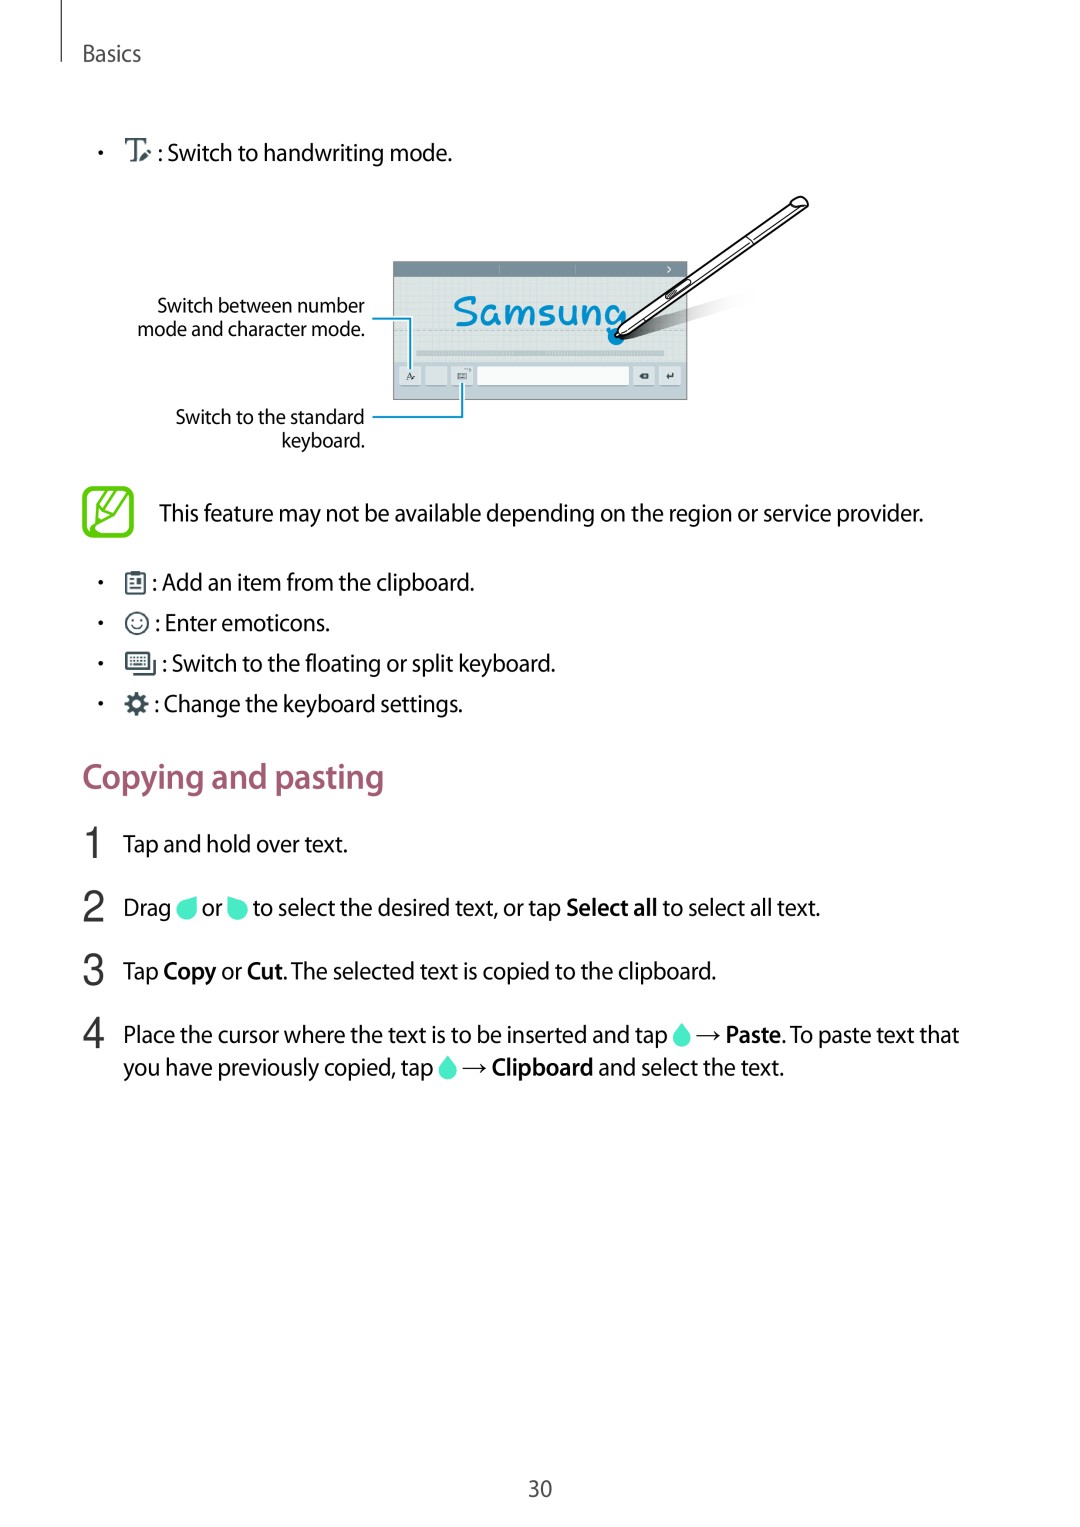 Samsung SM-P550NZWAXEF, SM-P550NZKALUX, SM-P550NZWACHN, SM-P550NZWAXNZ, SM-P550NZWATUR manual Copying and pasting, Basics 